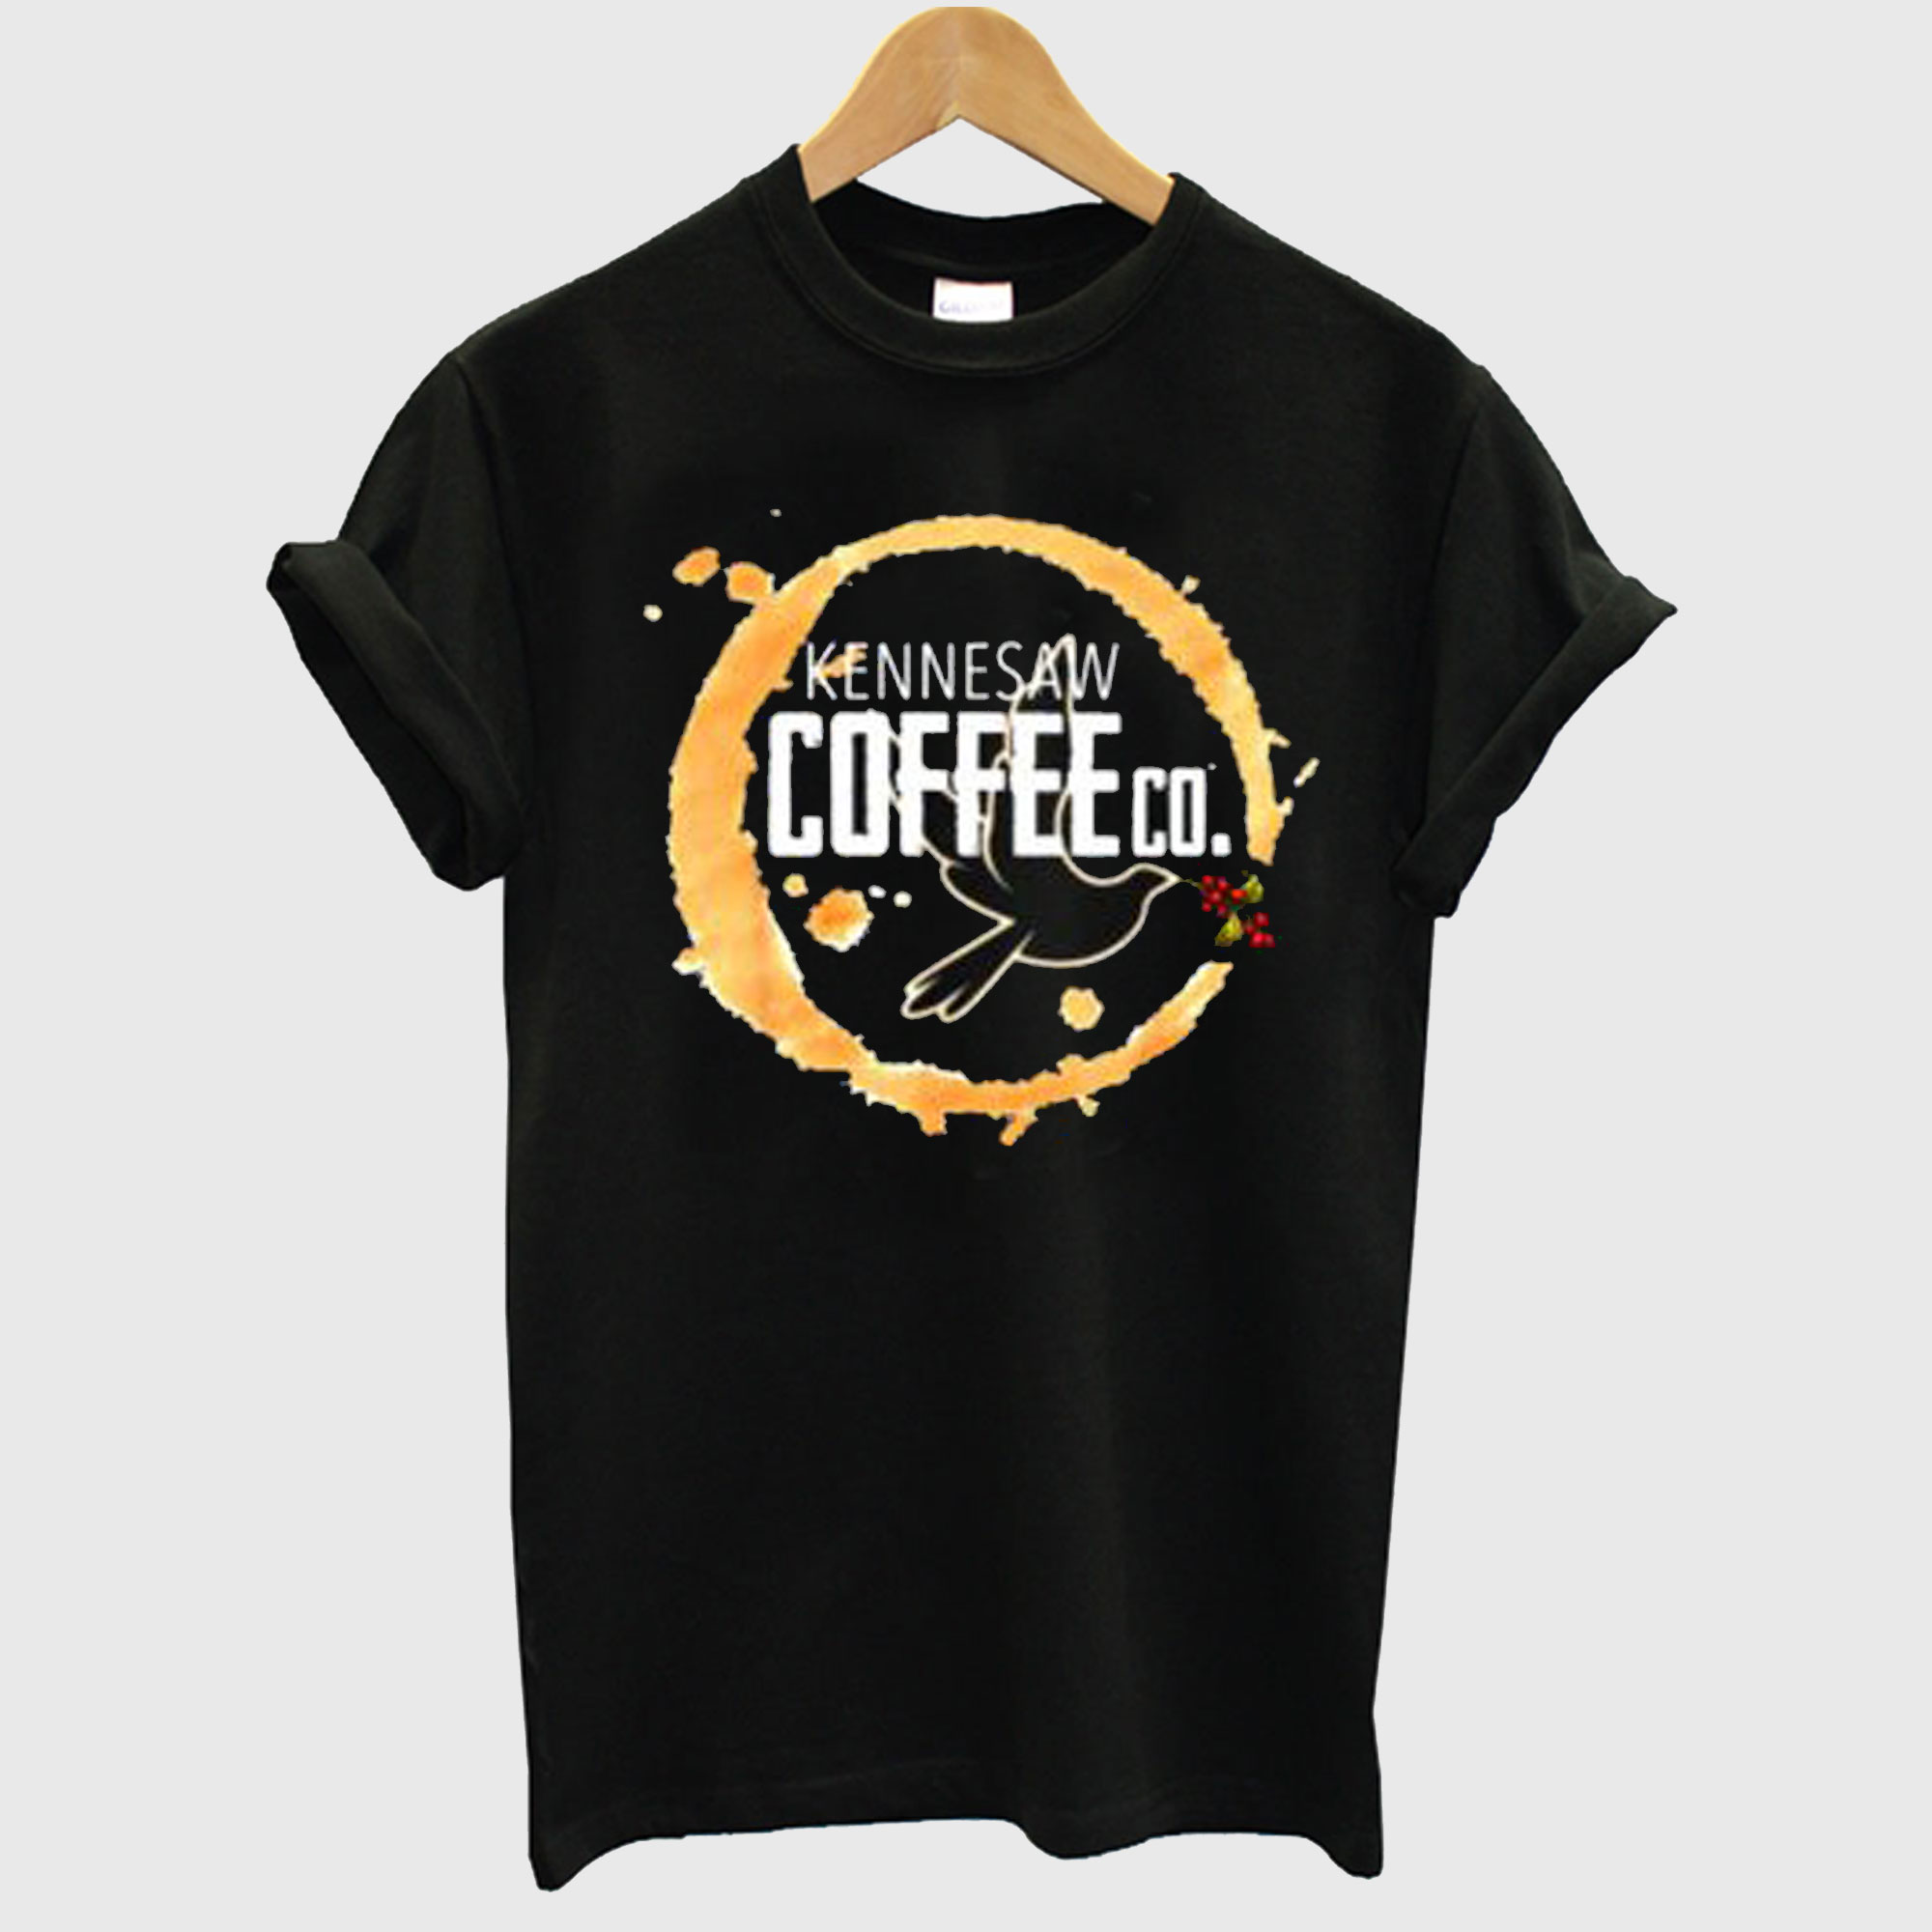 Kennesaw Coffee Co T shirt